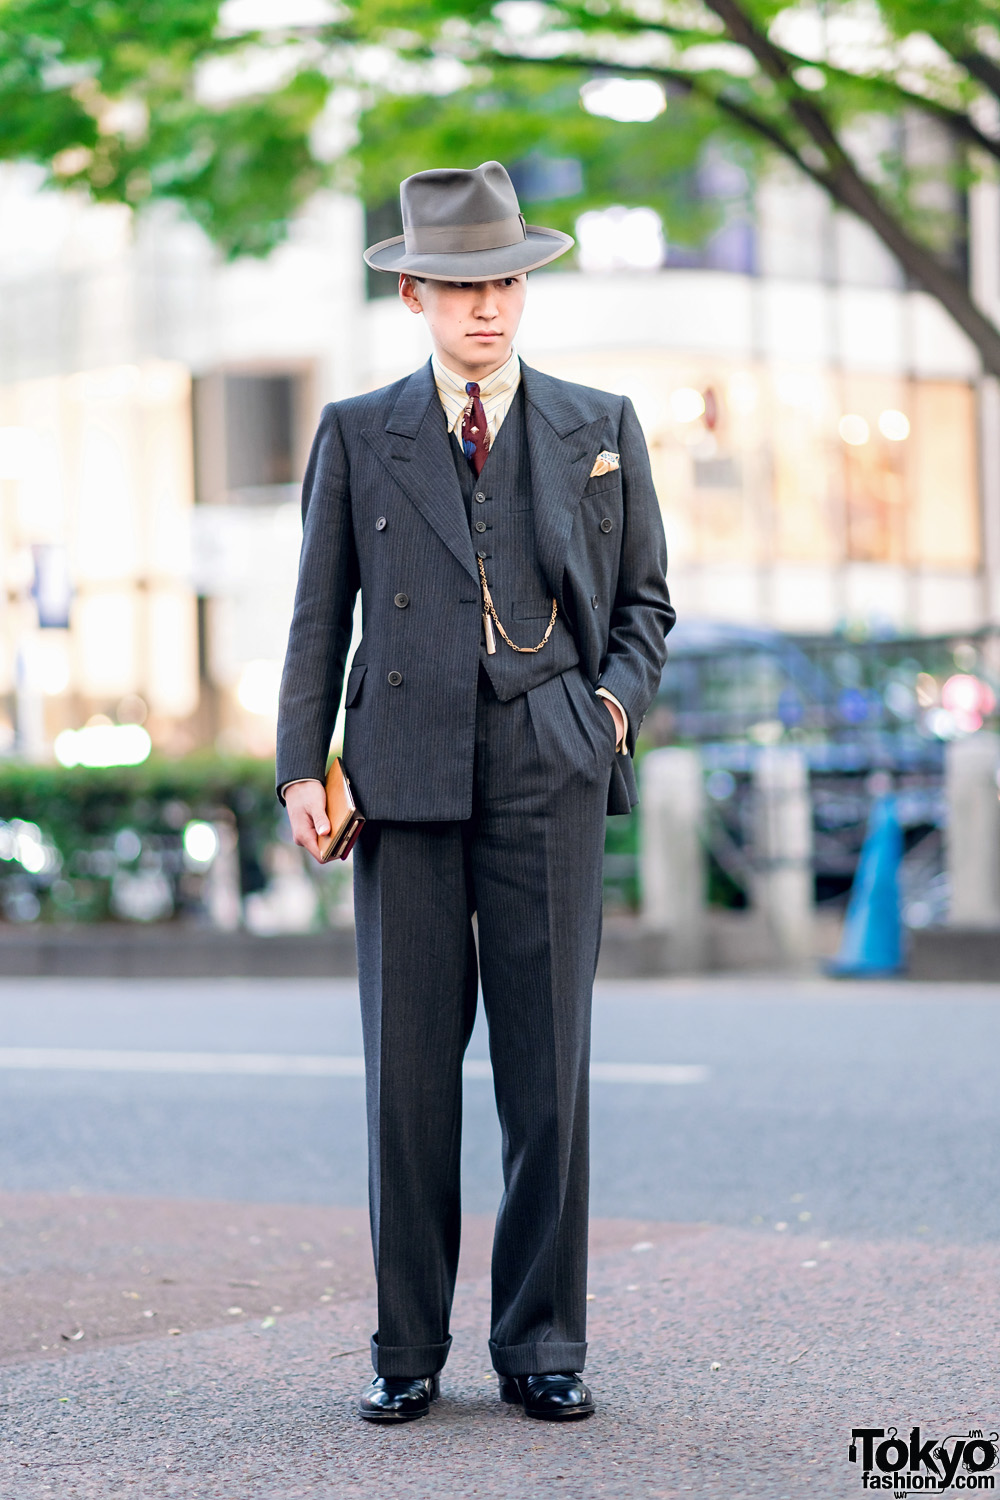 Dapper Tokyo Street Fashion w/ Vintage 1940’s Stetson Hat, Pocket